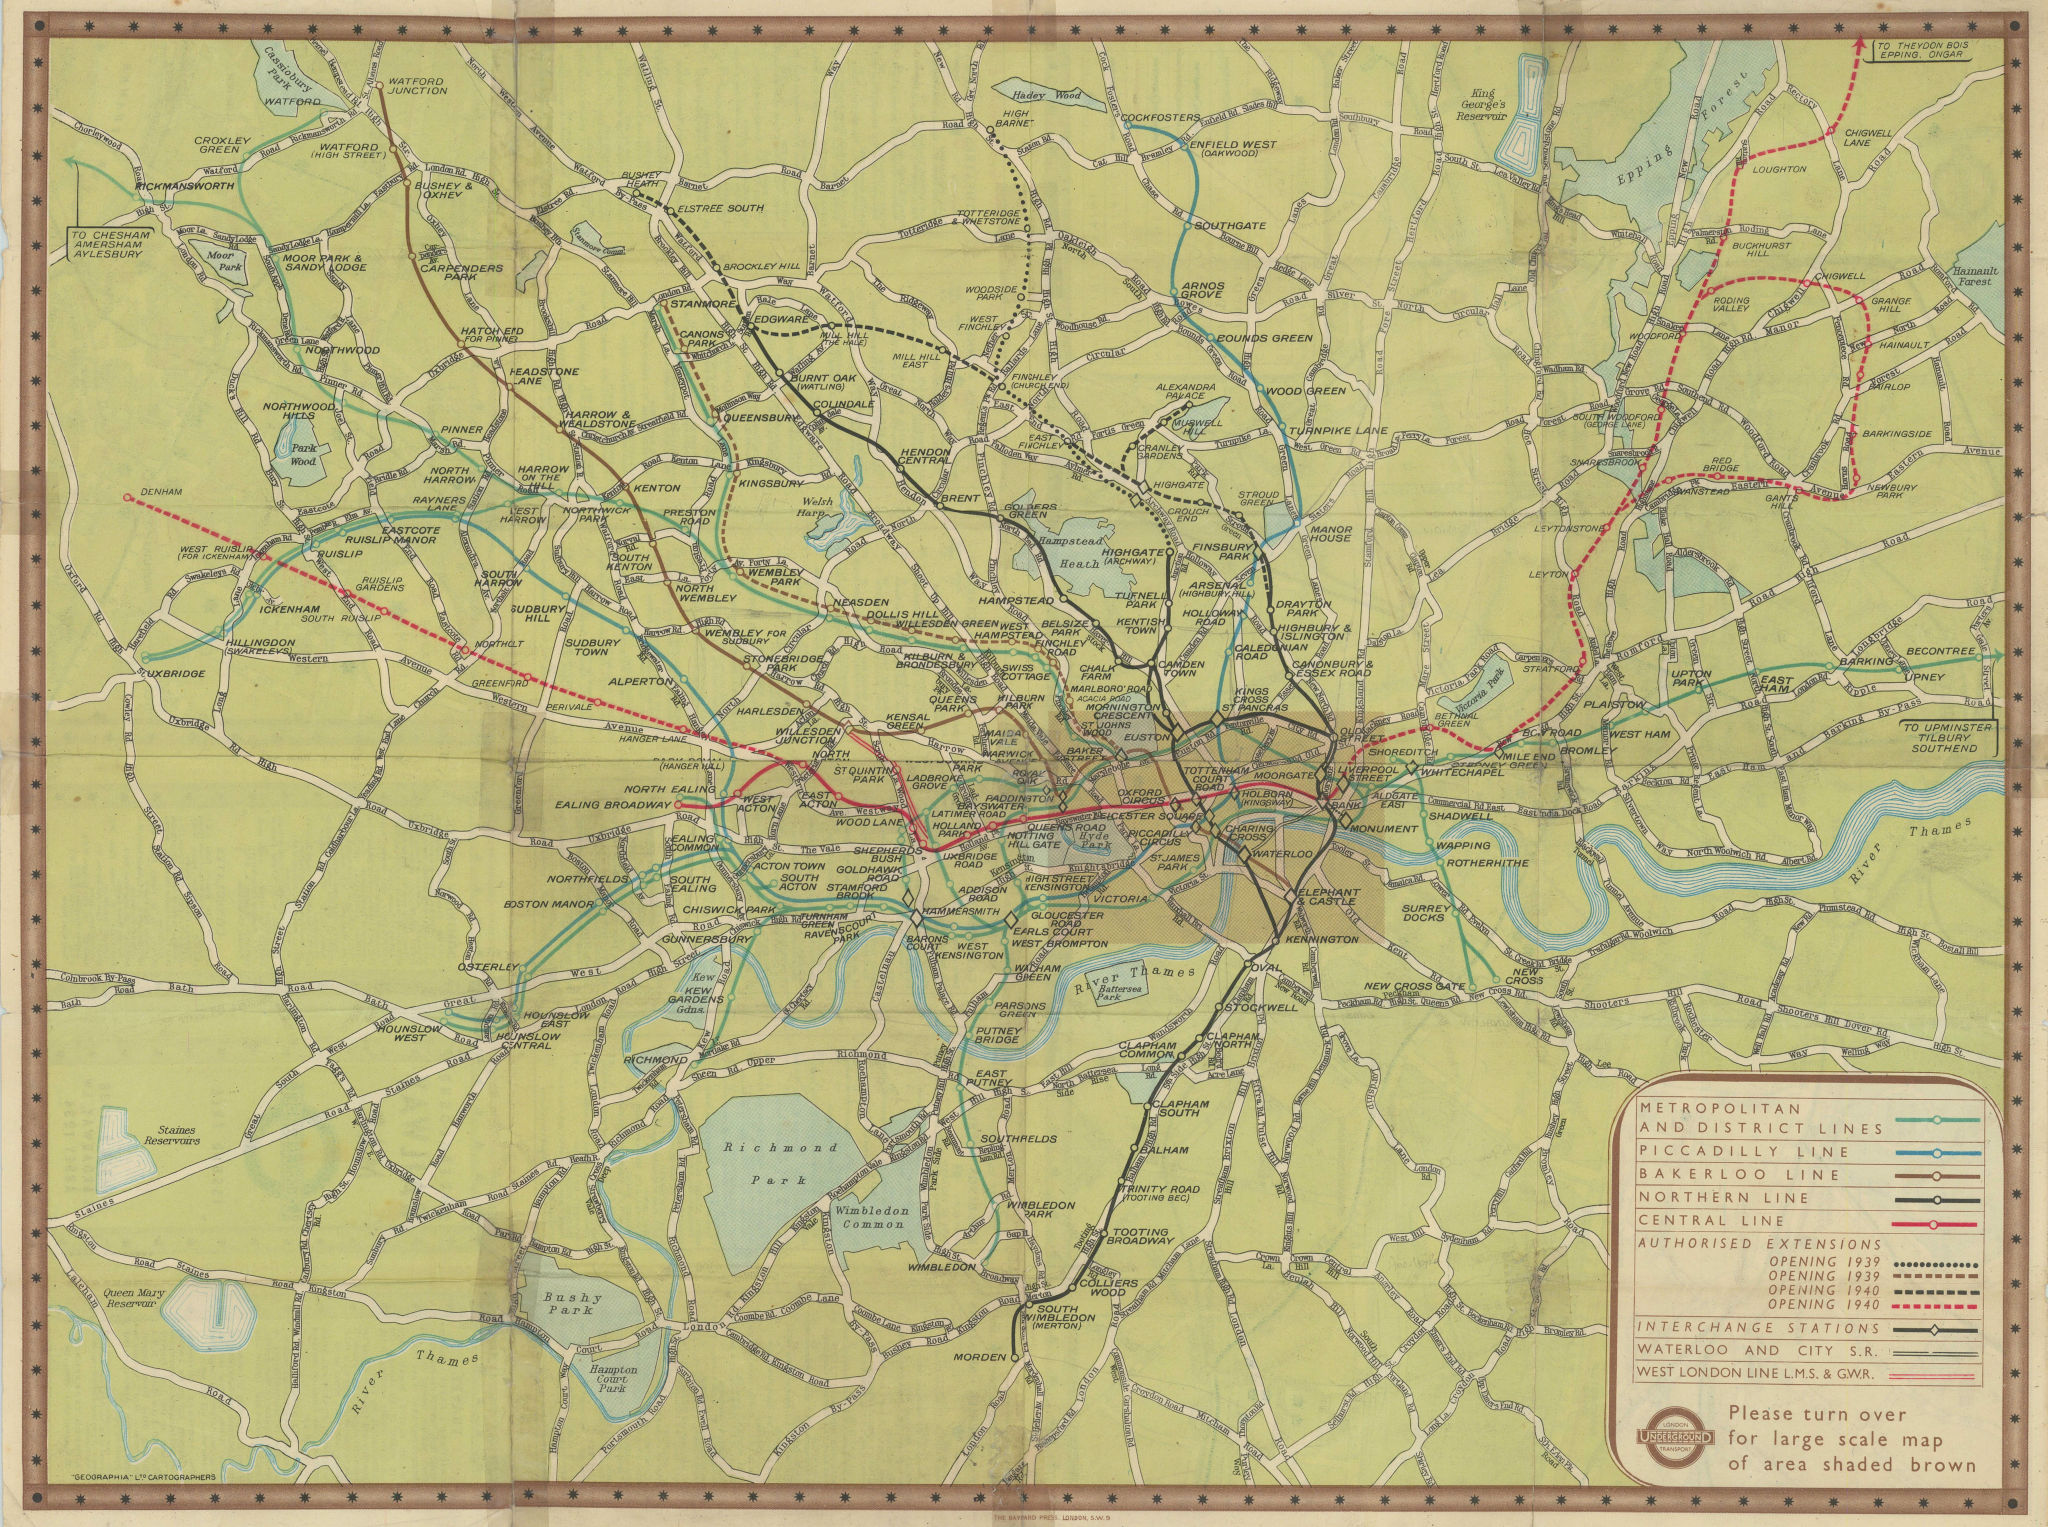 Associate Product London Transport Underground Railway map #2 1938 old vintage plan chart